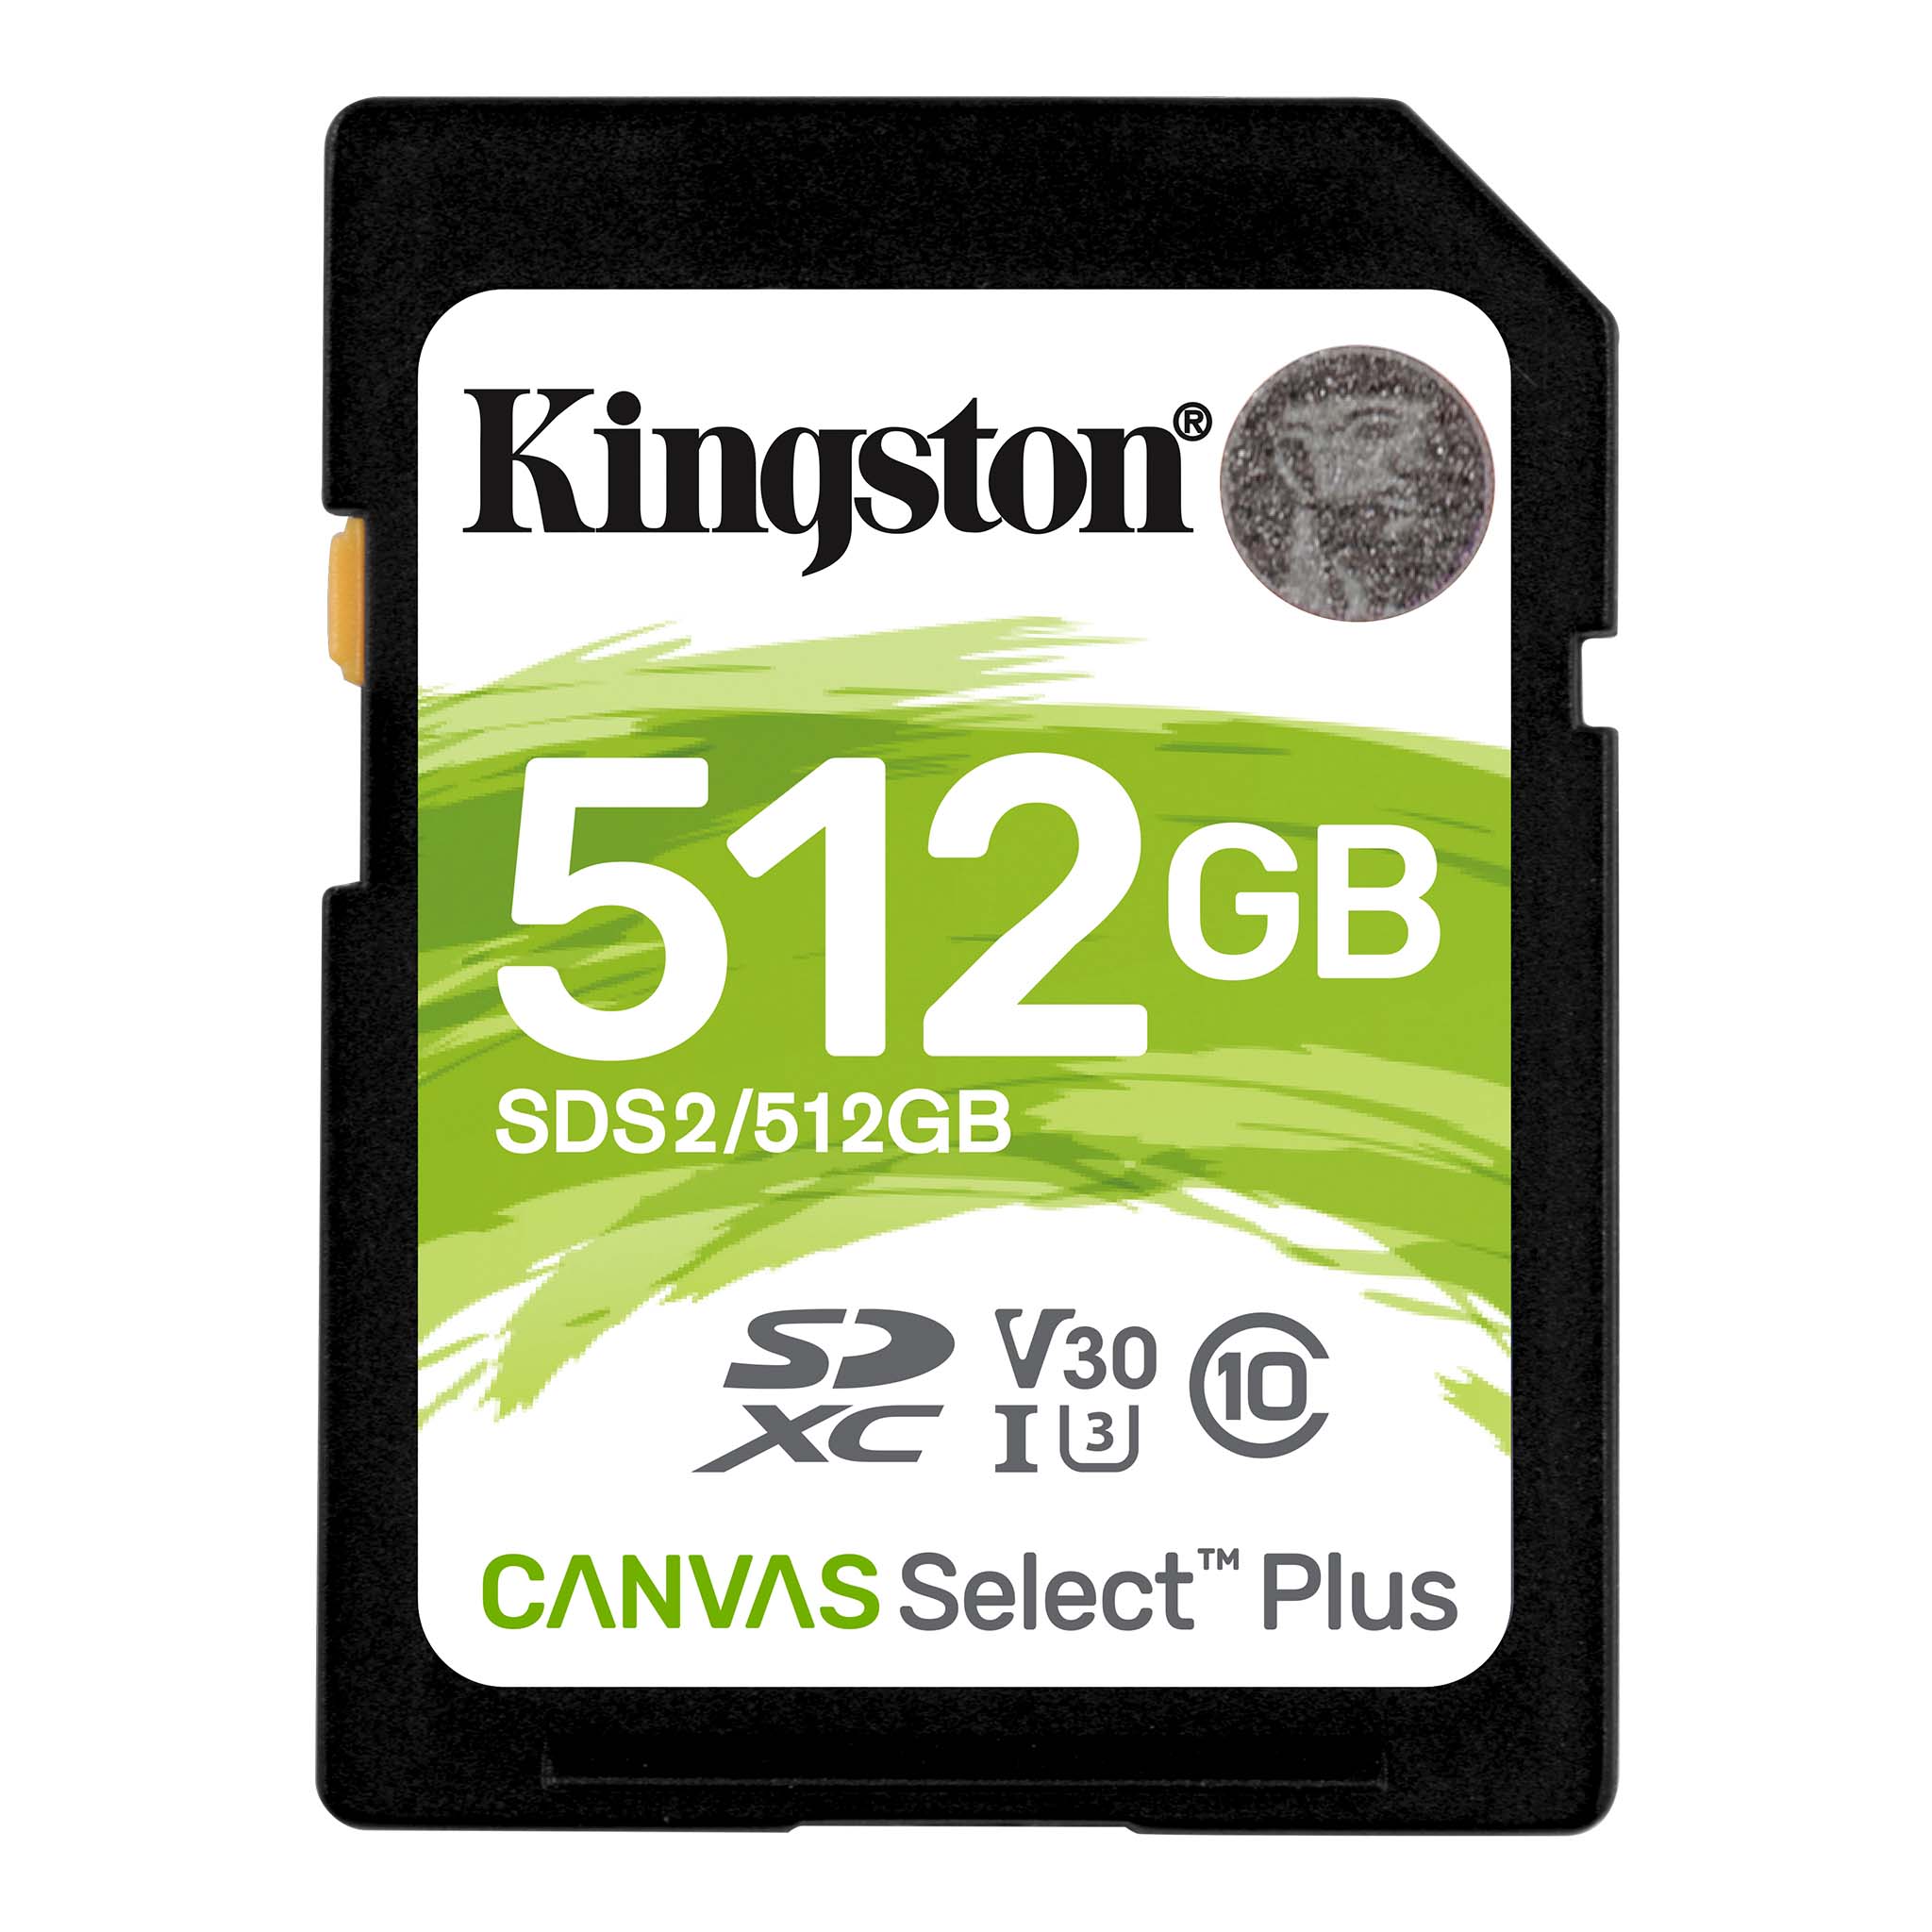 Kingston 512GB Karbonn Titanium S1 Plus MicroSDXC Canvas Select Plus Card Verified by SanFlash. 100MBs Works with Kingston